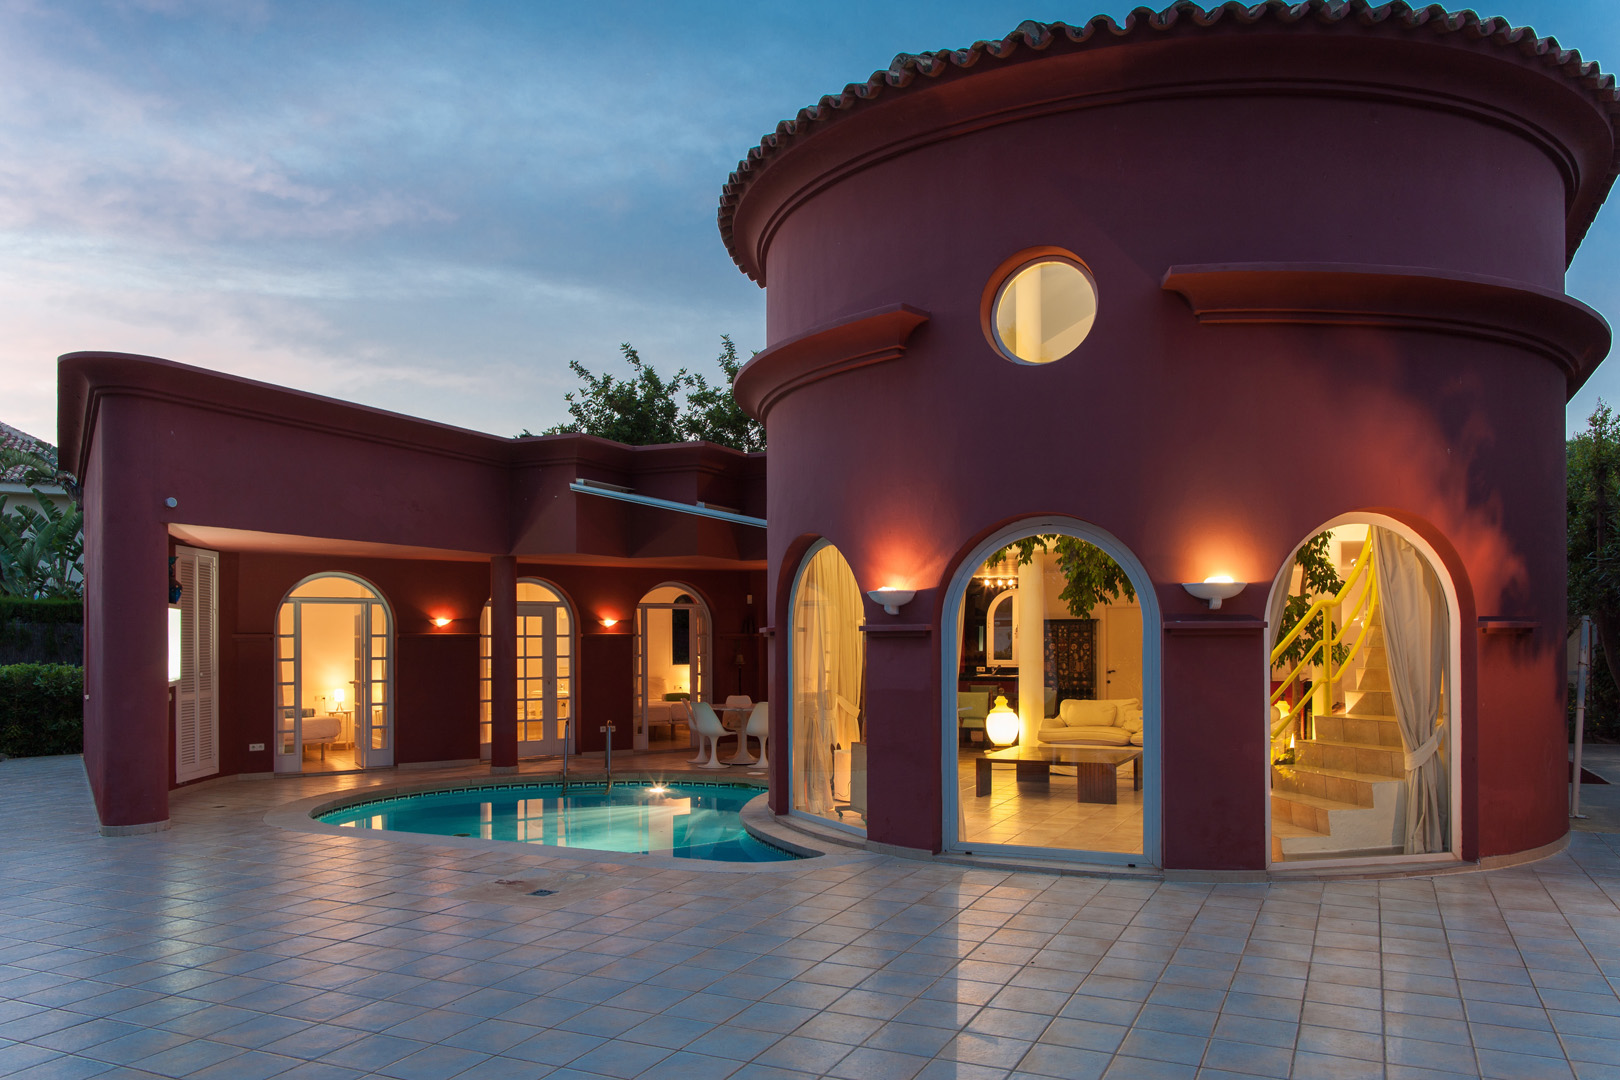 Holiday villa, Costa del Sol, beach and swimming pool